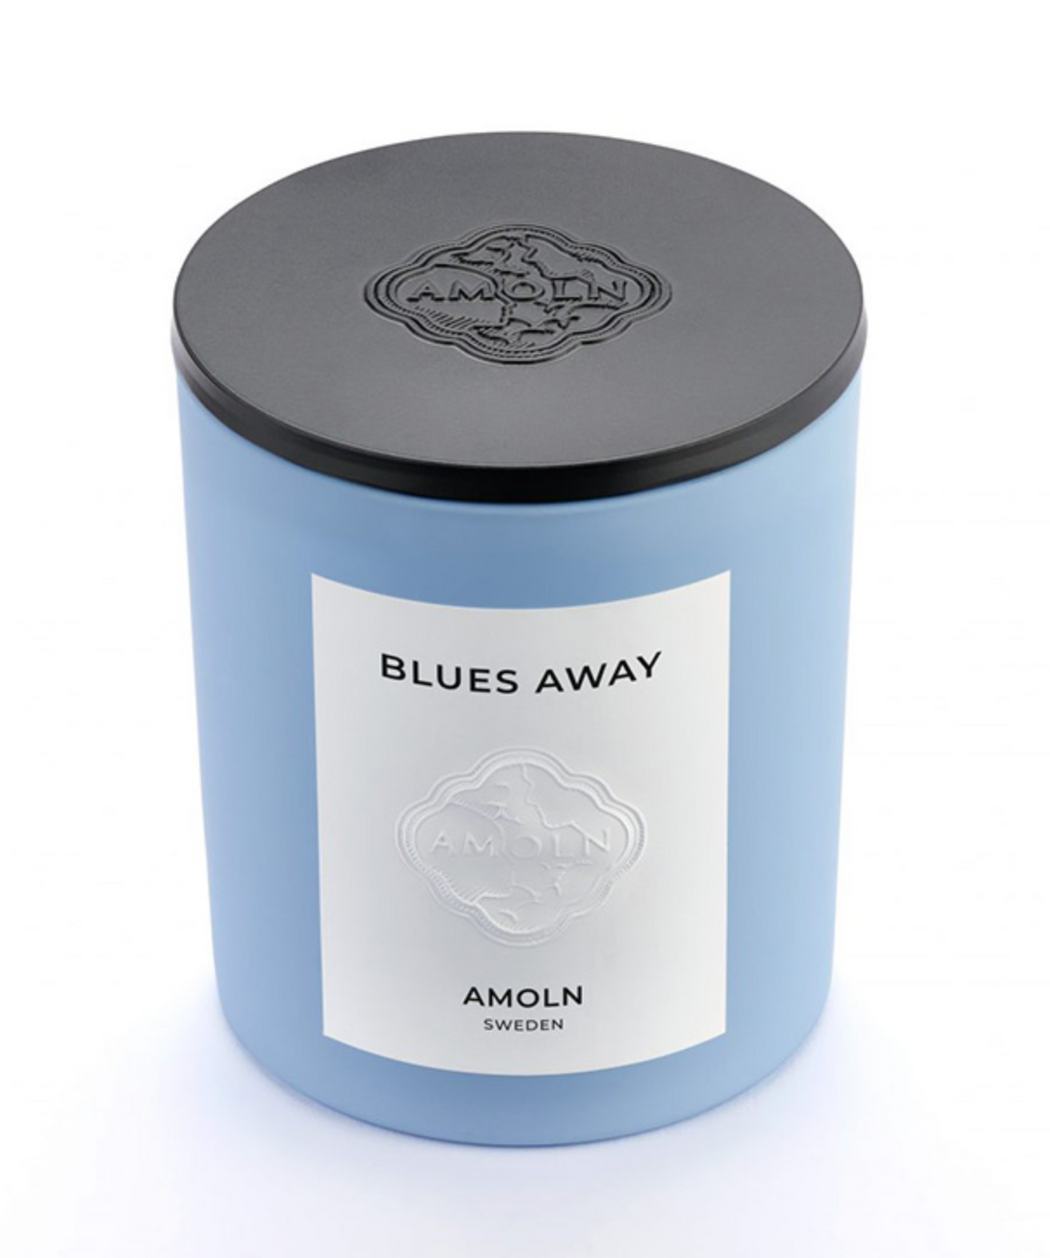 Amoln :: Blues Away Candle